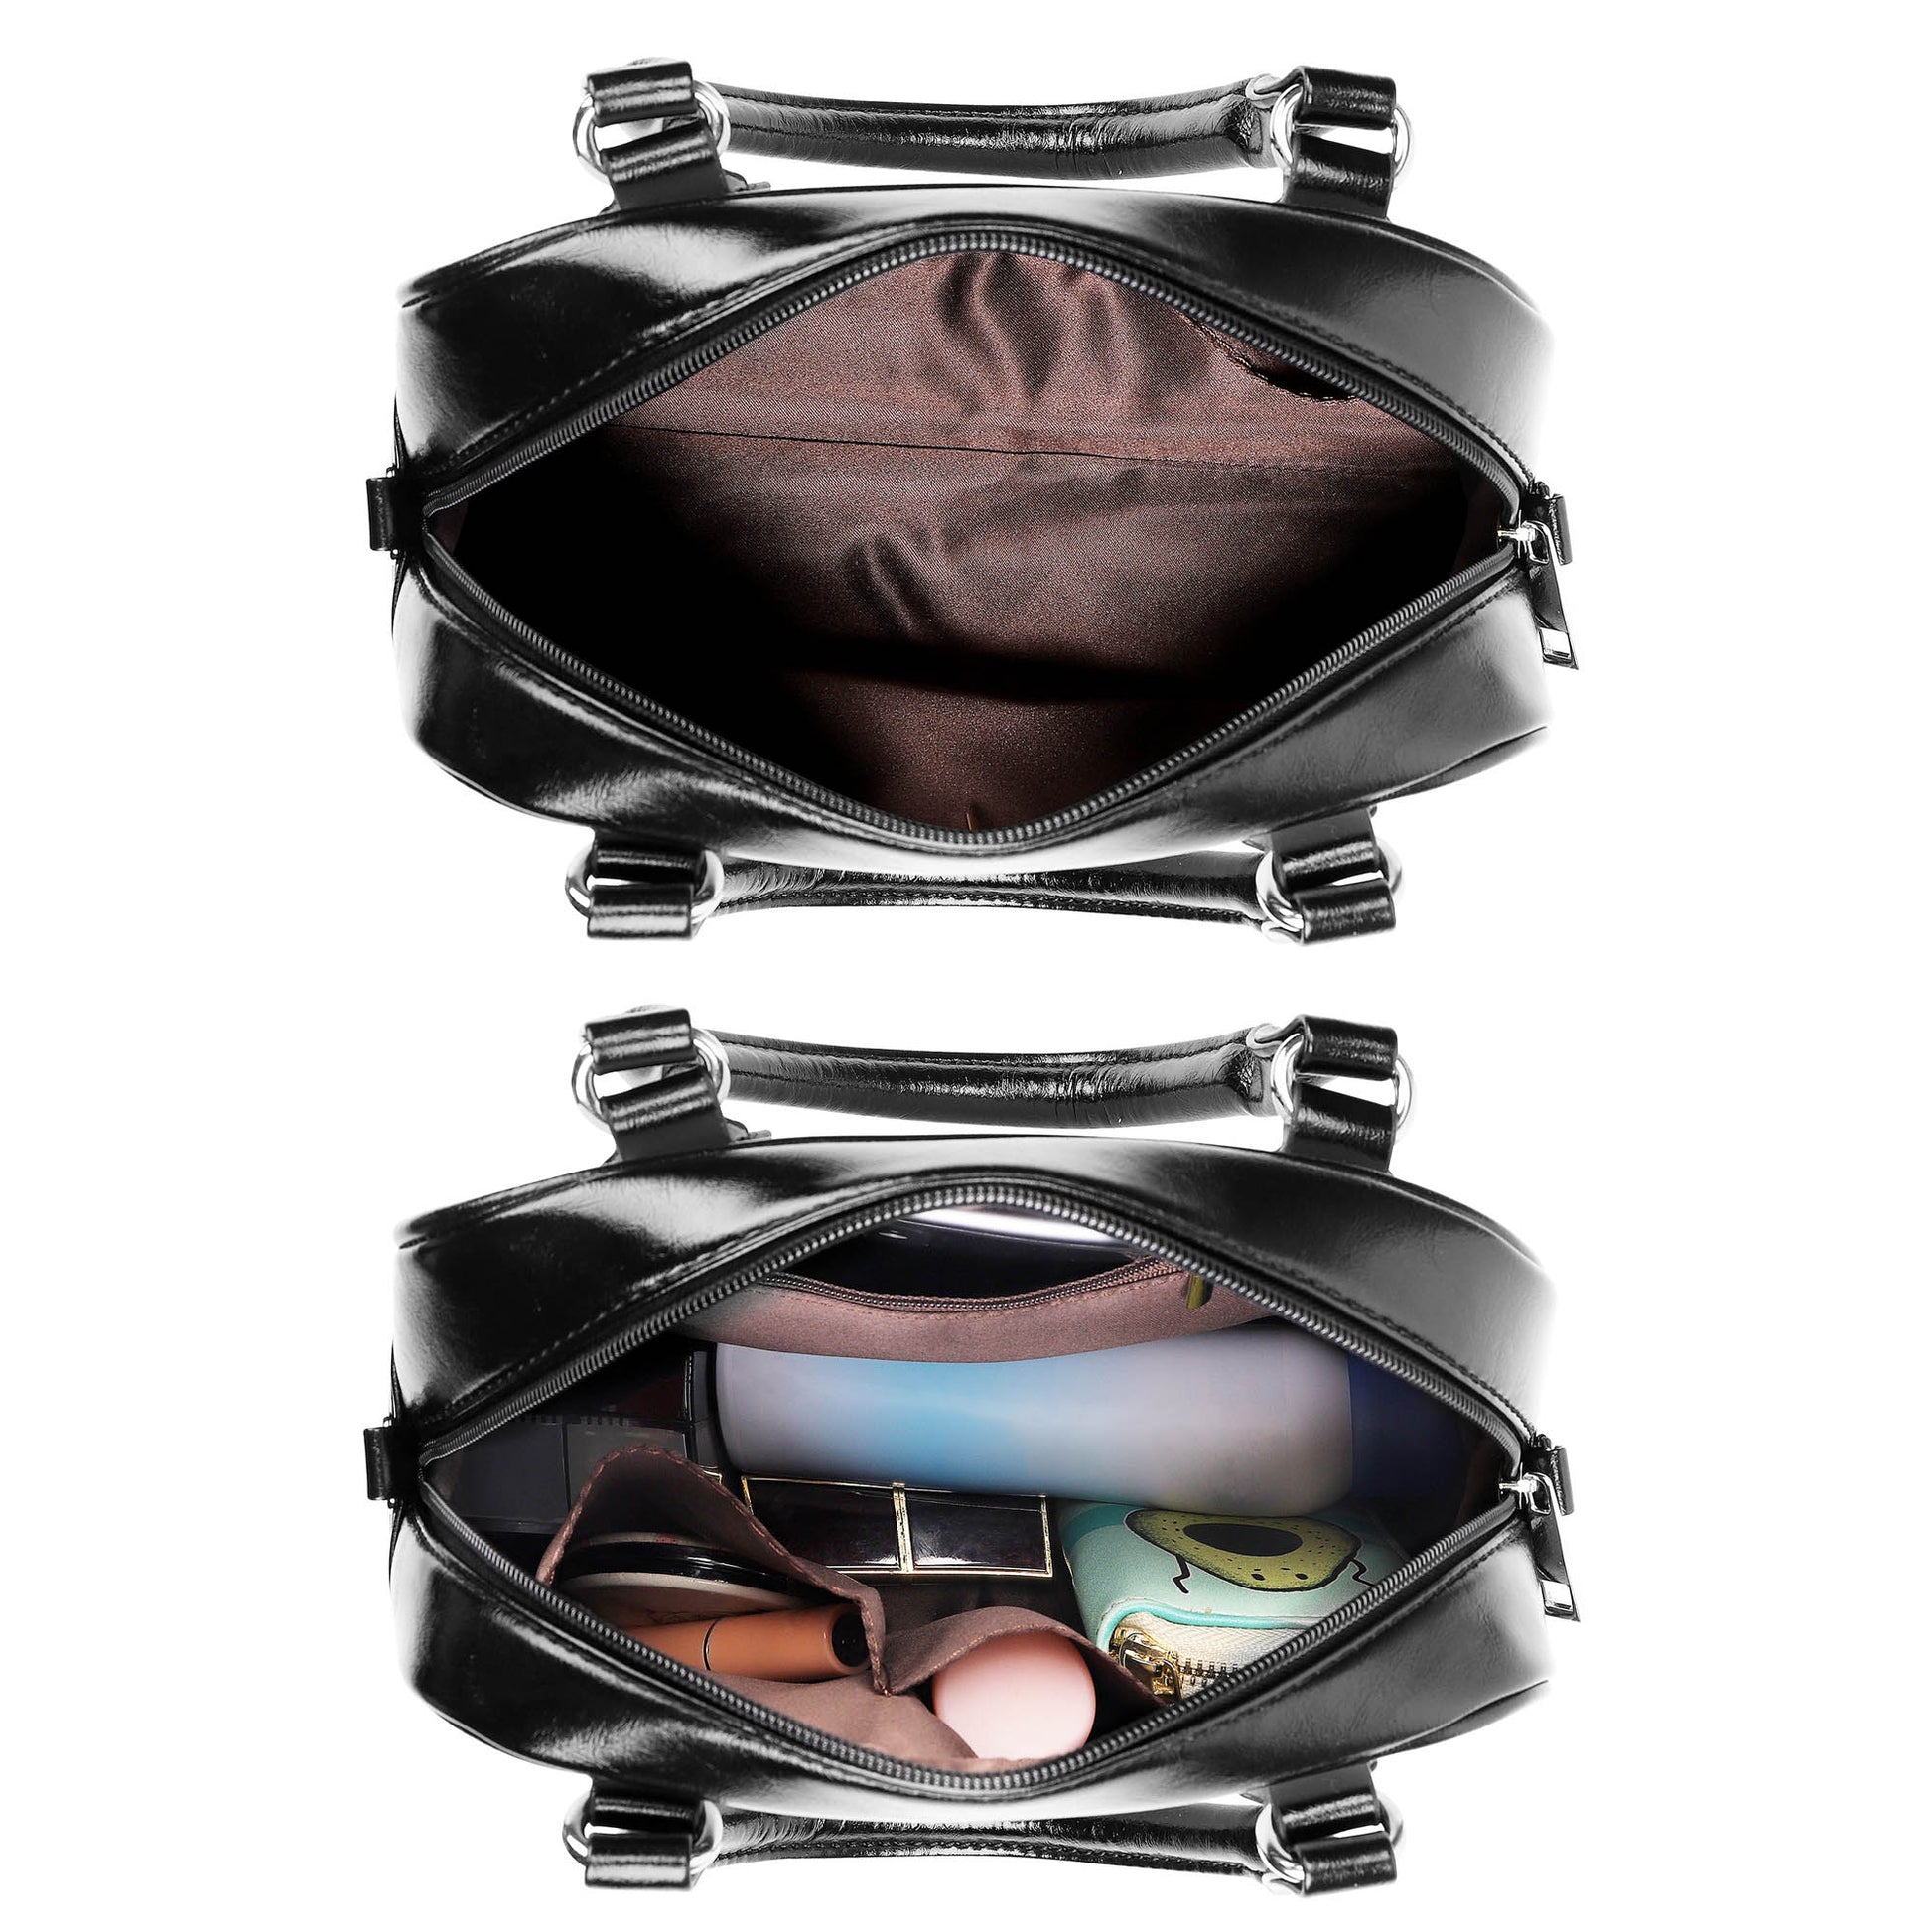 Guthrie Modern Tartan Shoulder Handbags - Tartanvibesclothing